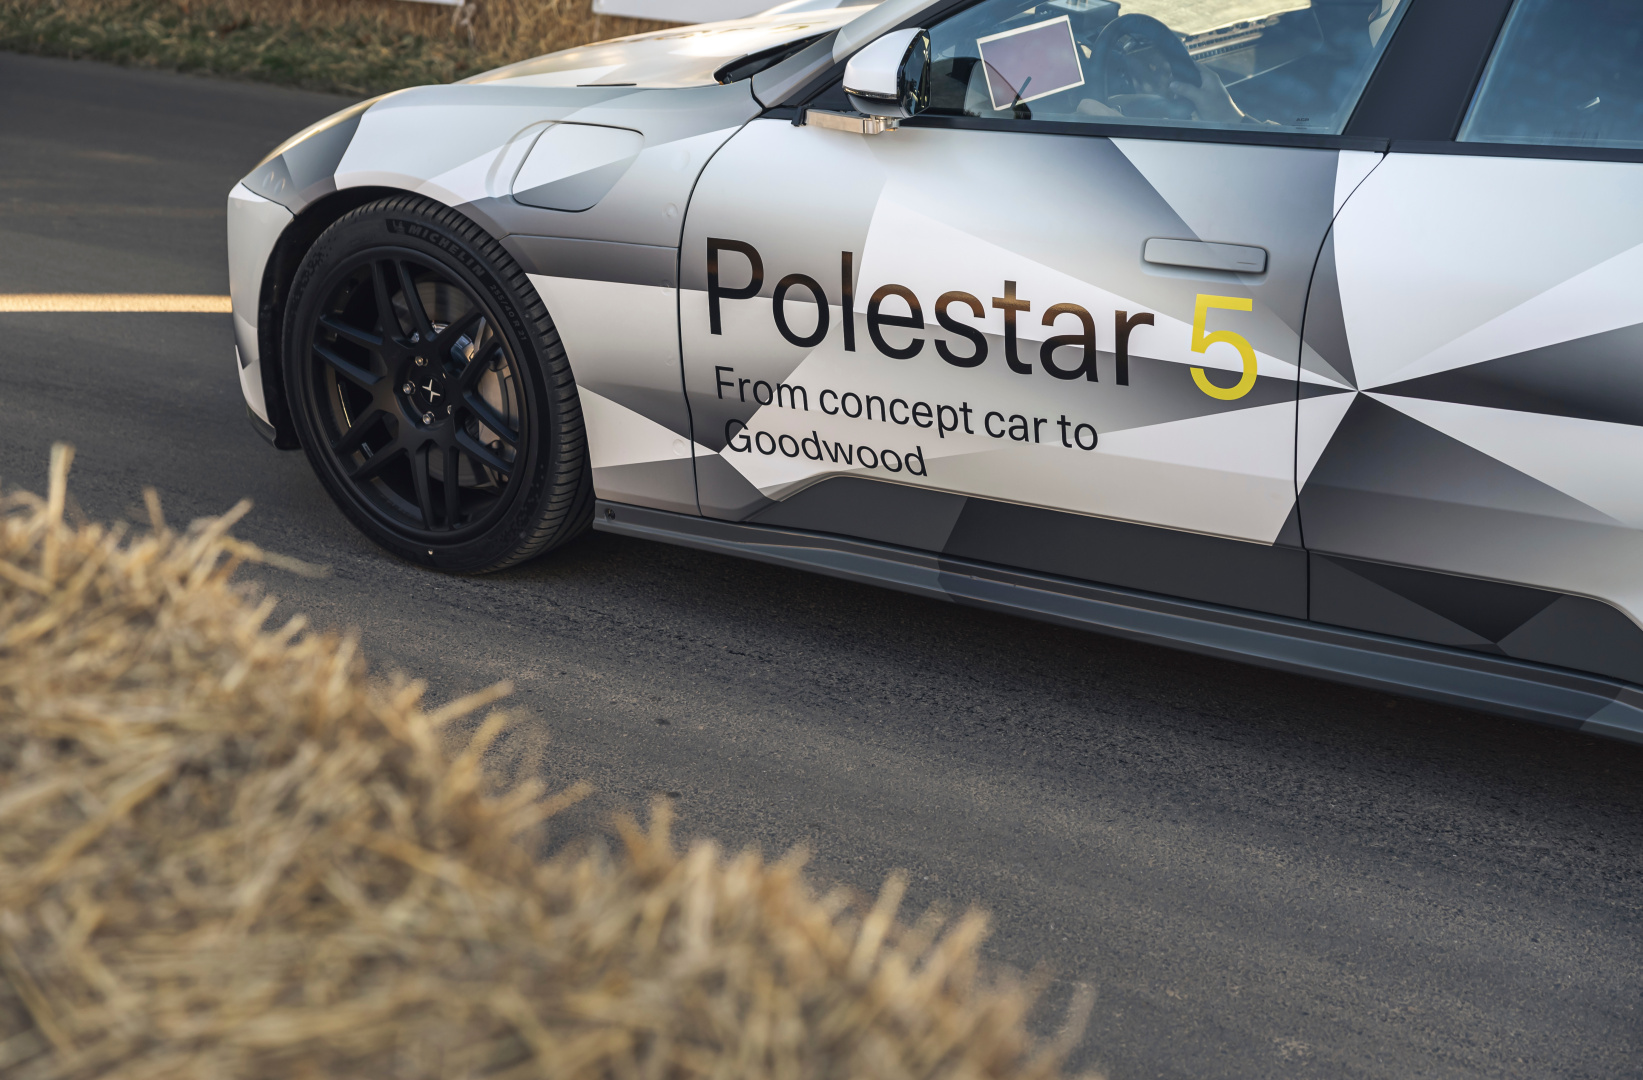 SMALL_Polestar_5_electric_4-door_GT_to_debut_exclusive_new_Polestar_electric_powertrain (6)